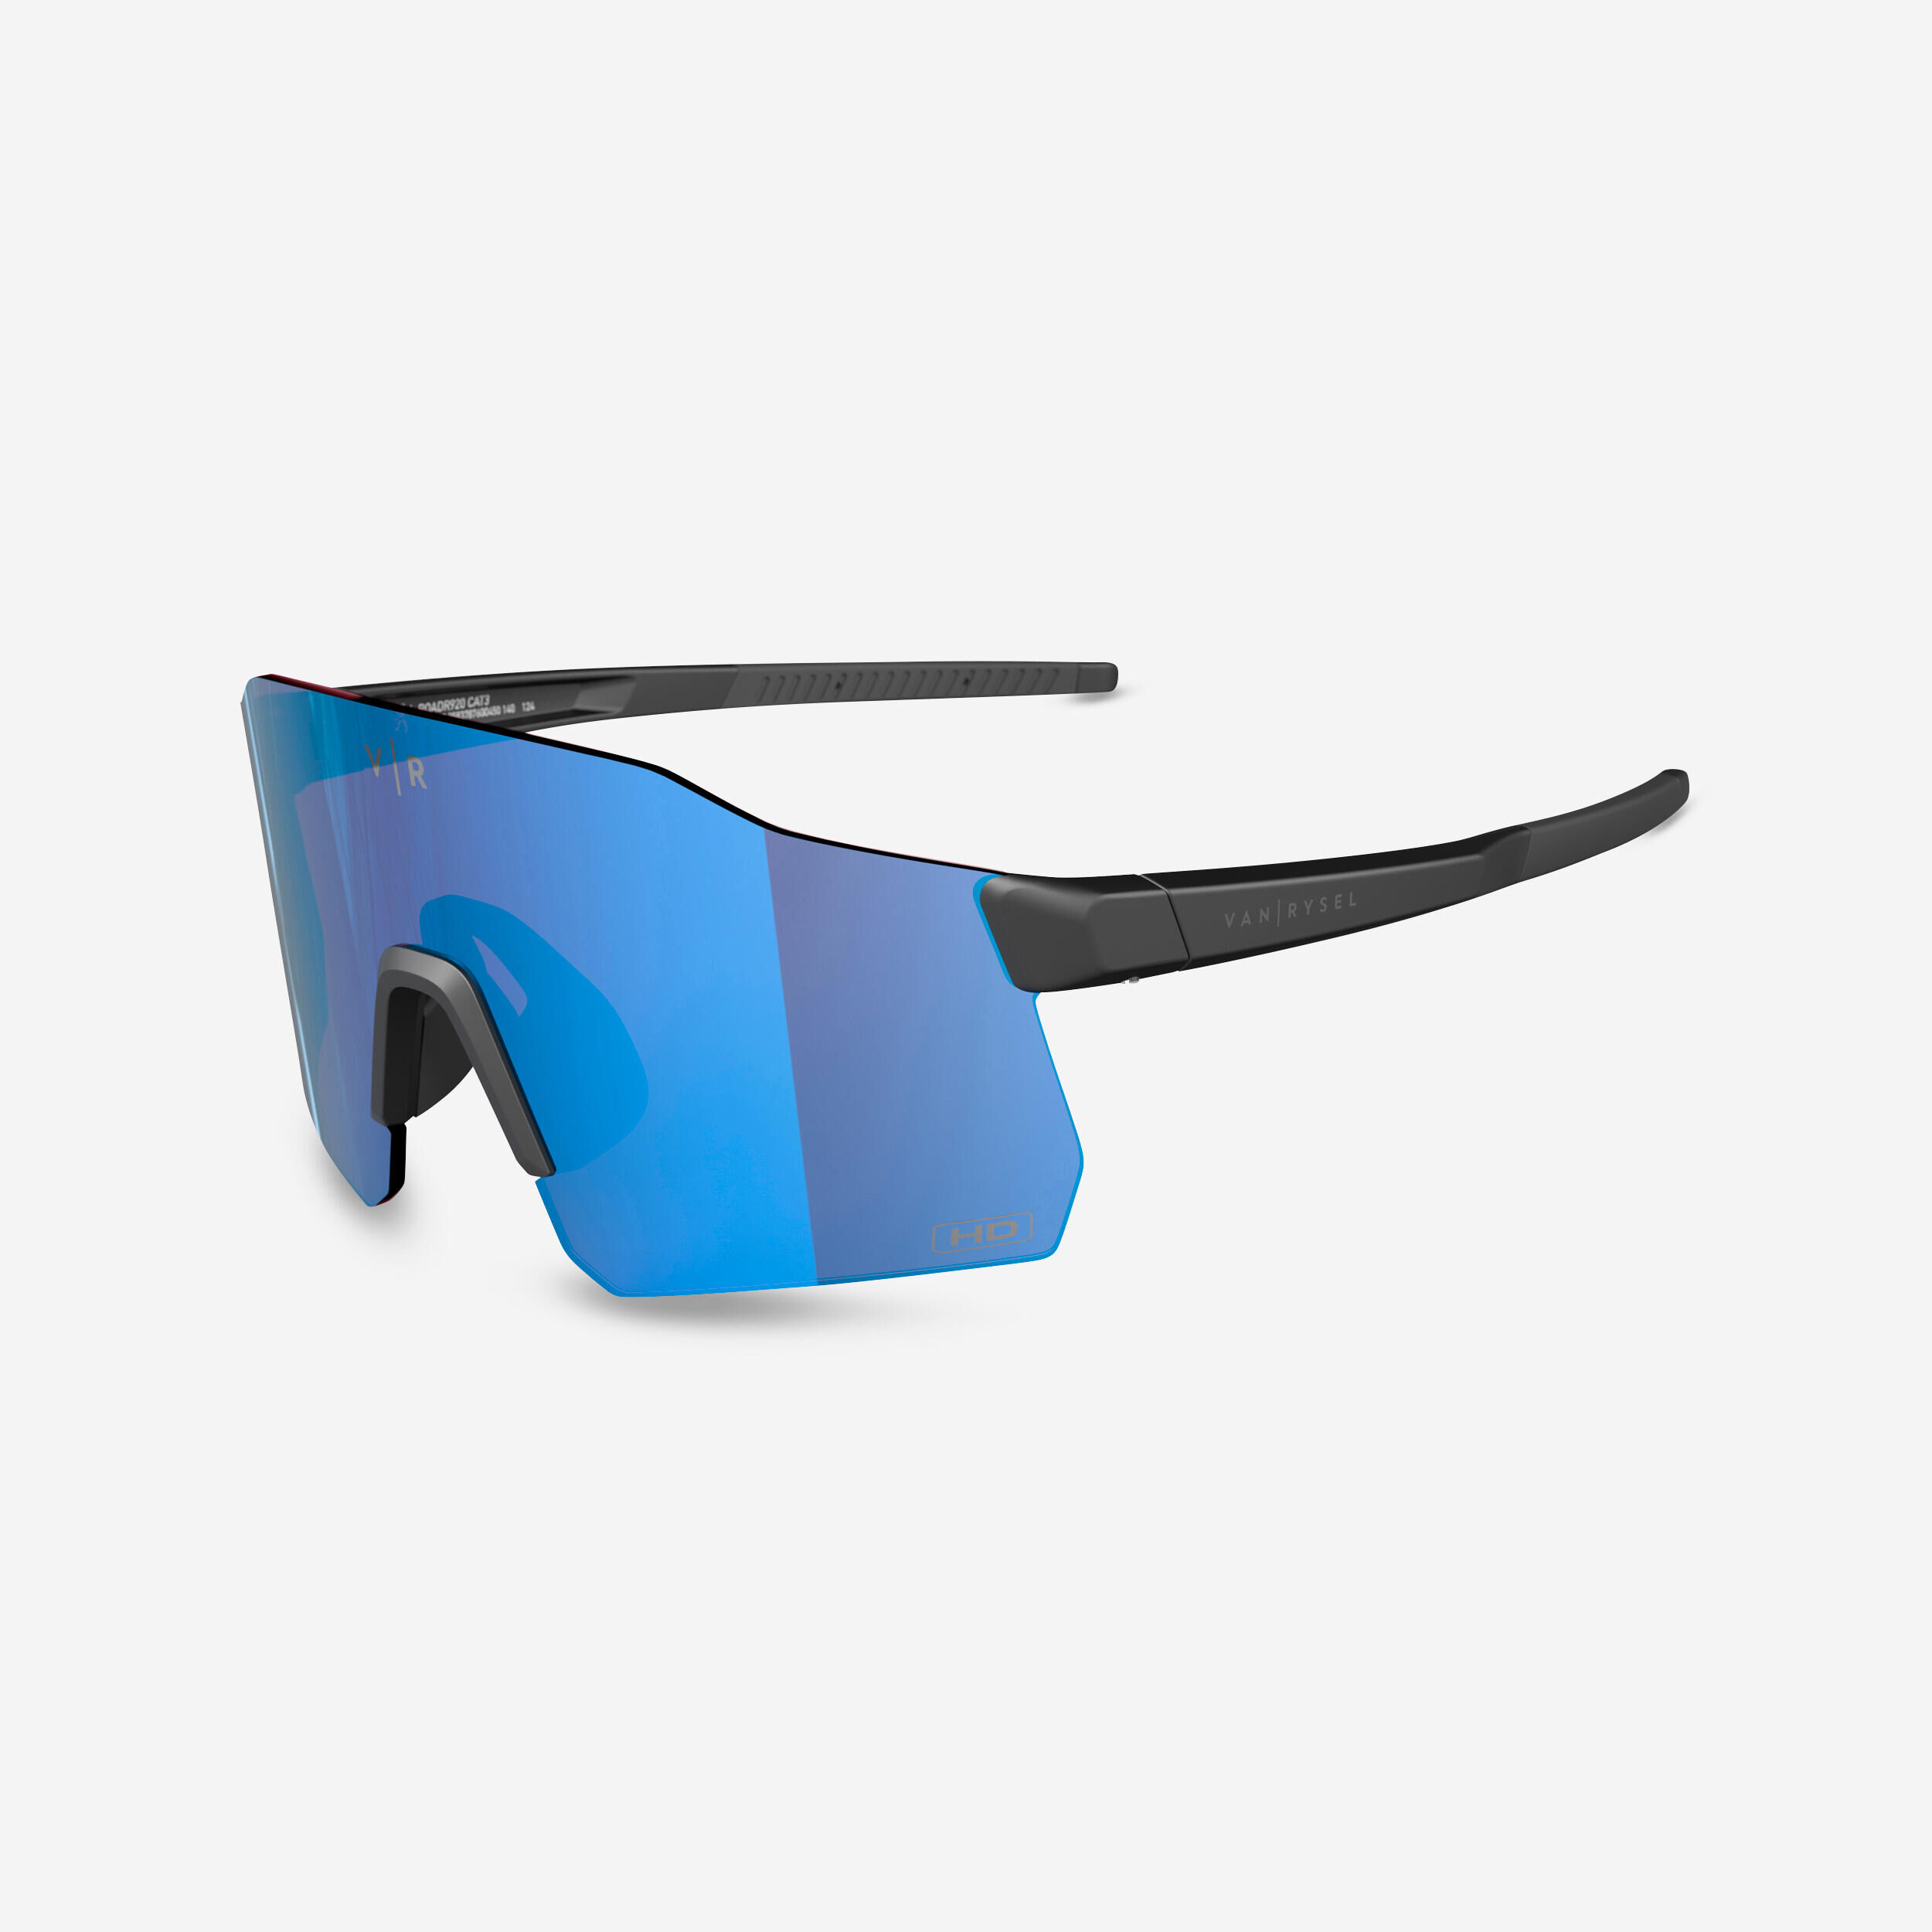 VAN RYSEL Adult Cycling Sunglasses RoadR 920 Category 3 High-Definition - Blue